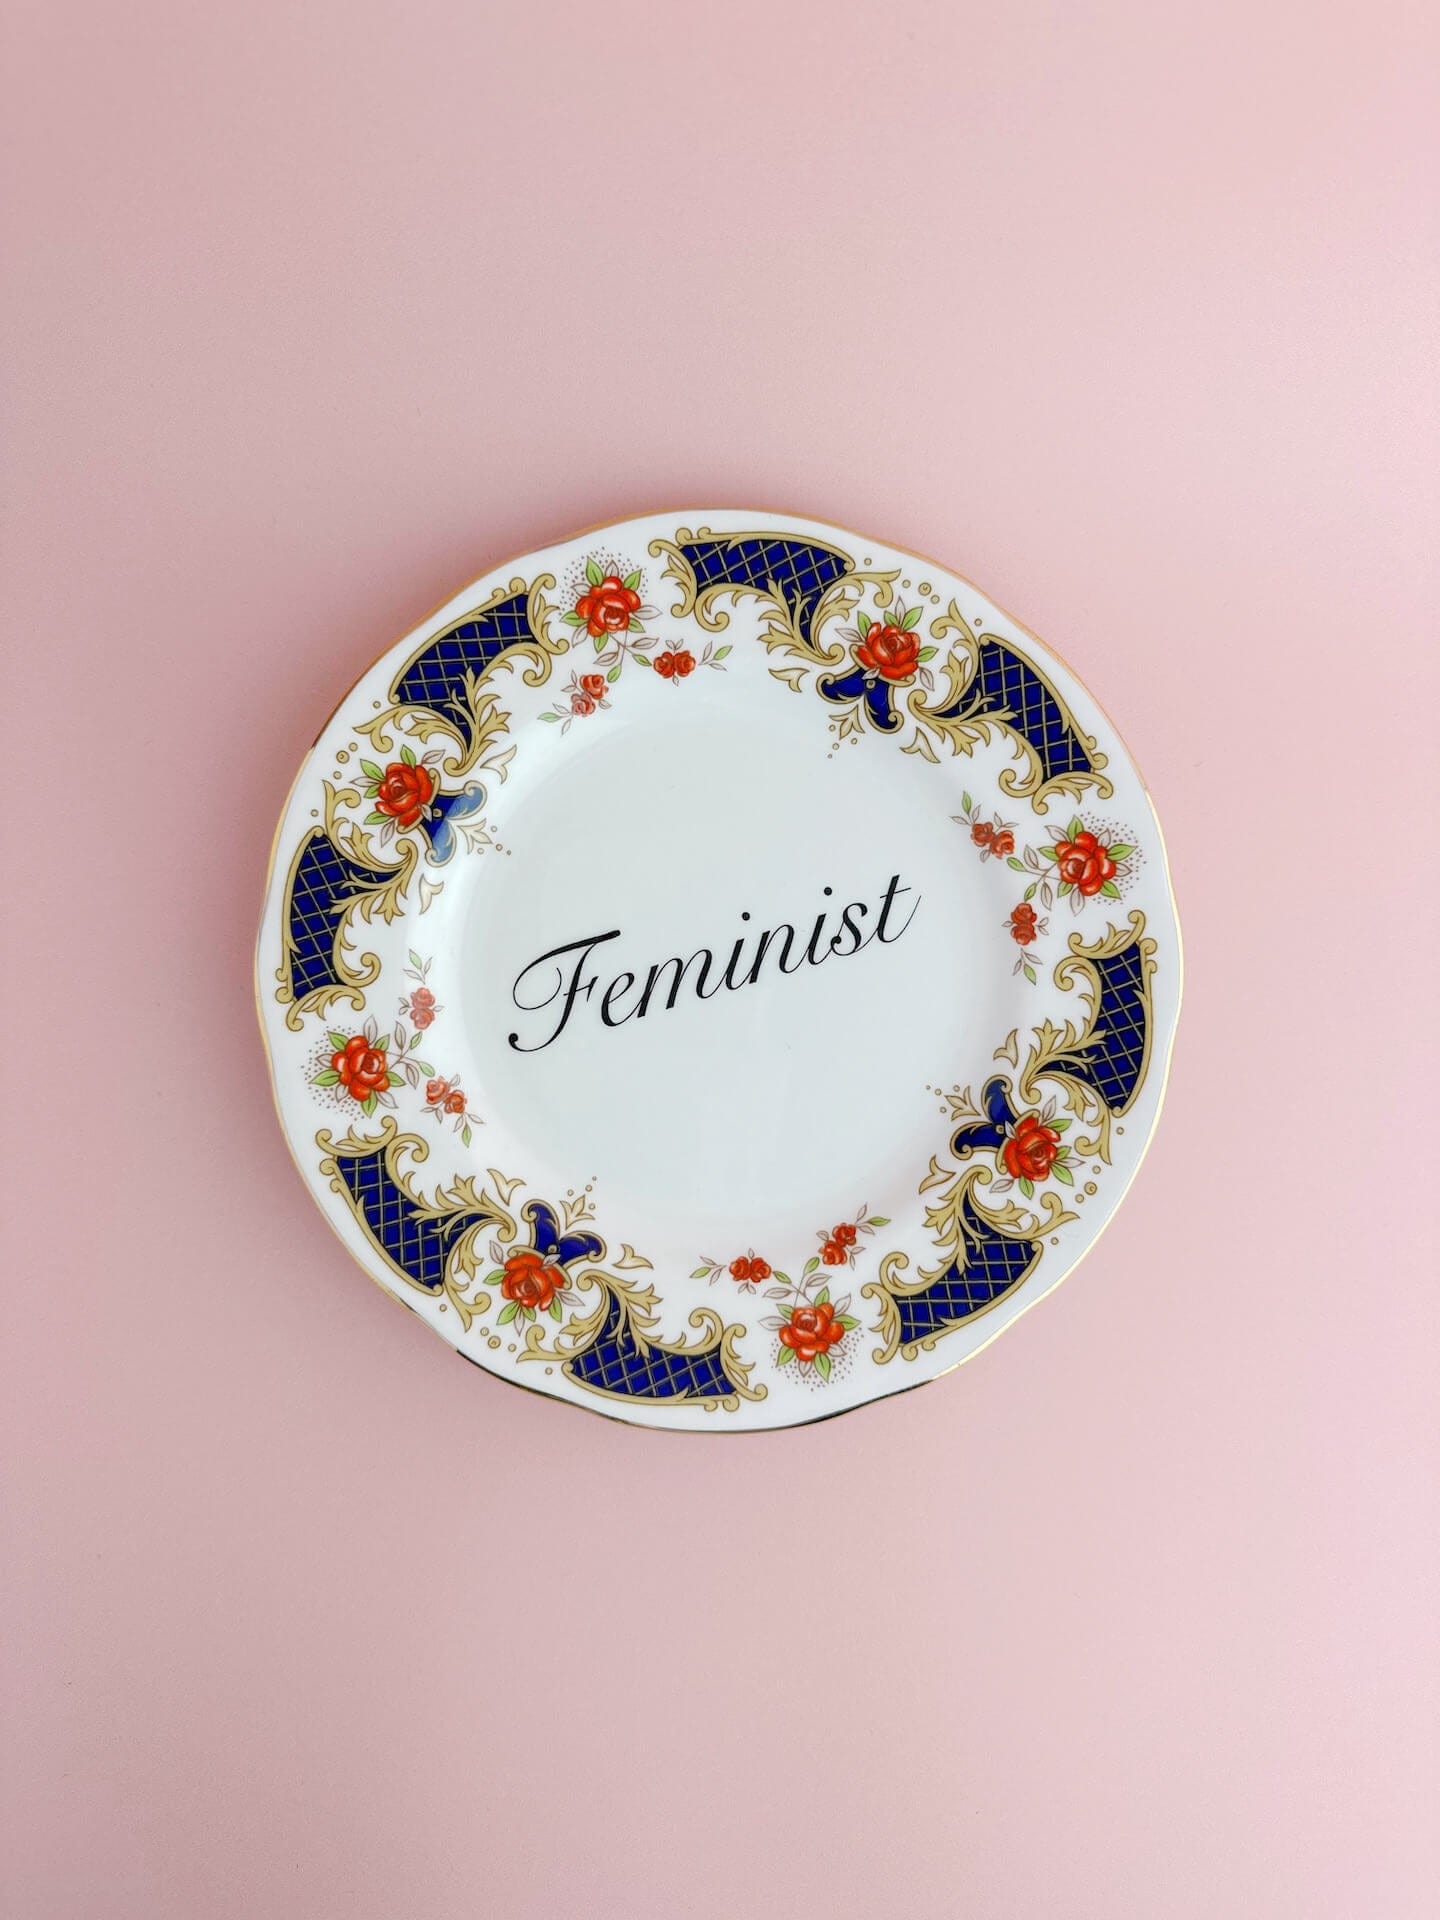 Beau & Badger Ceramics #62 Decorative Wall Plate - Feminist (multiple designs)